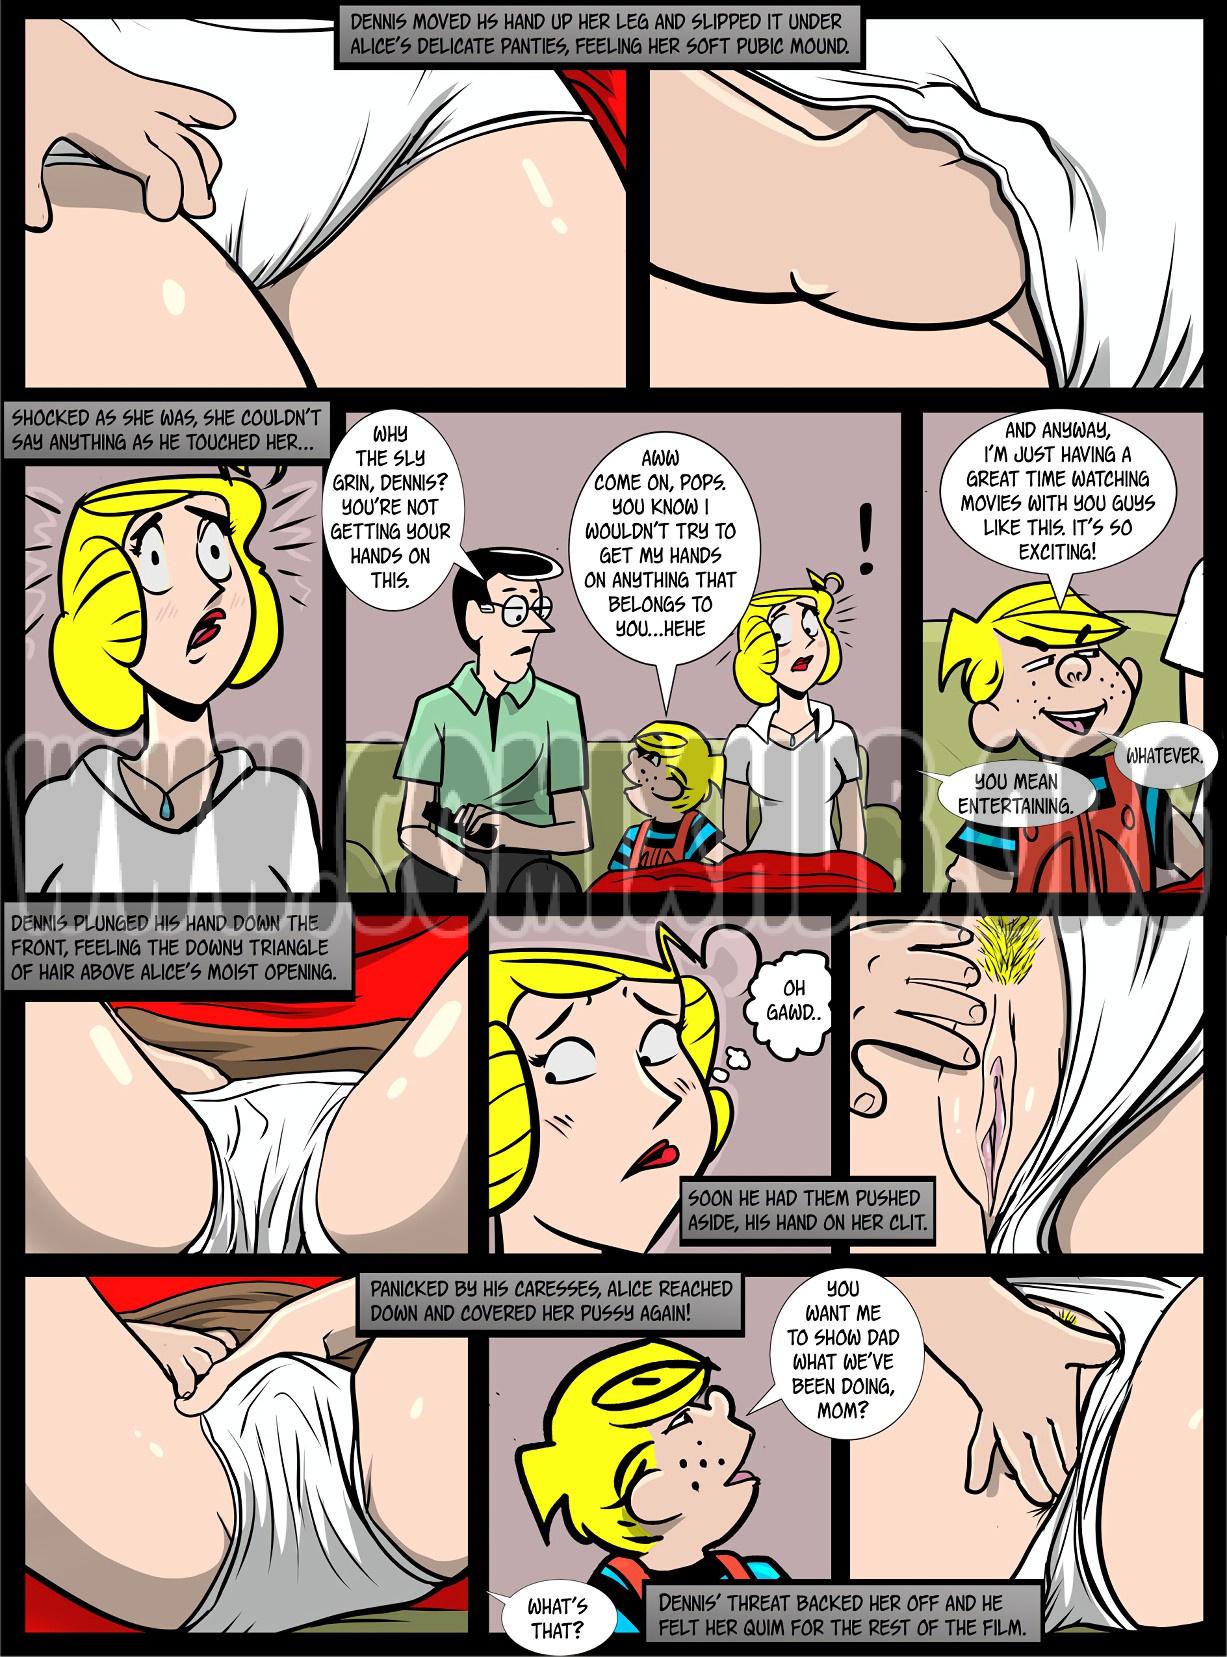 Dennis The Menace Origins porn comics Oral sex, Blowjob, cunnilingus, incest, Masturbation, MILF